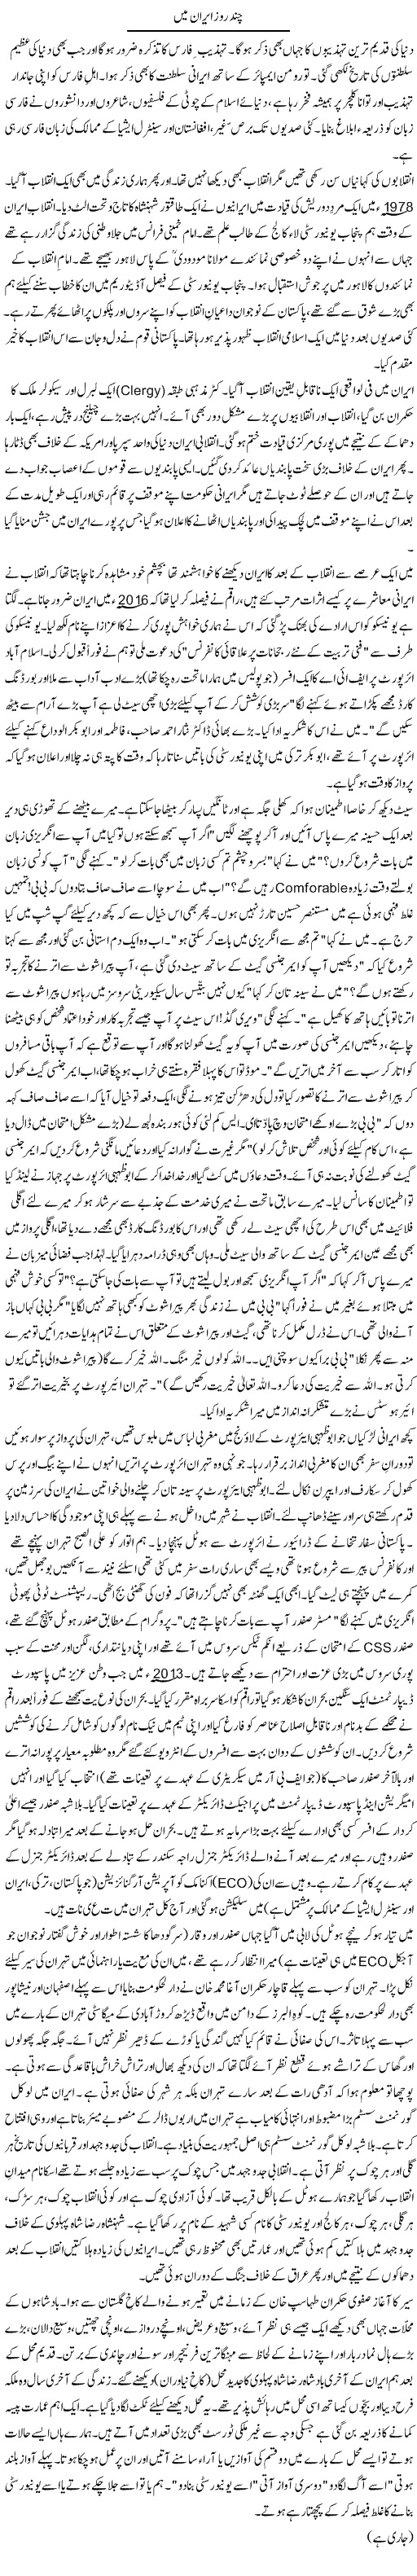 Chand Roz Iran Mein | Zulfiqar Ahmed Cheema | Daily Urdu Columns